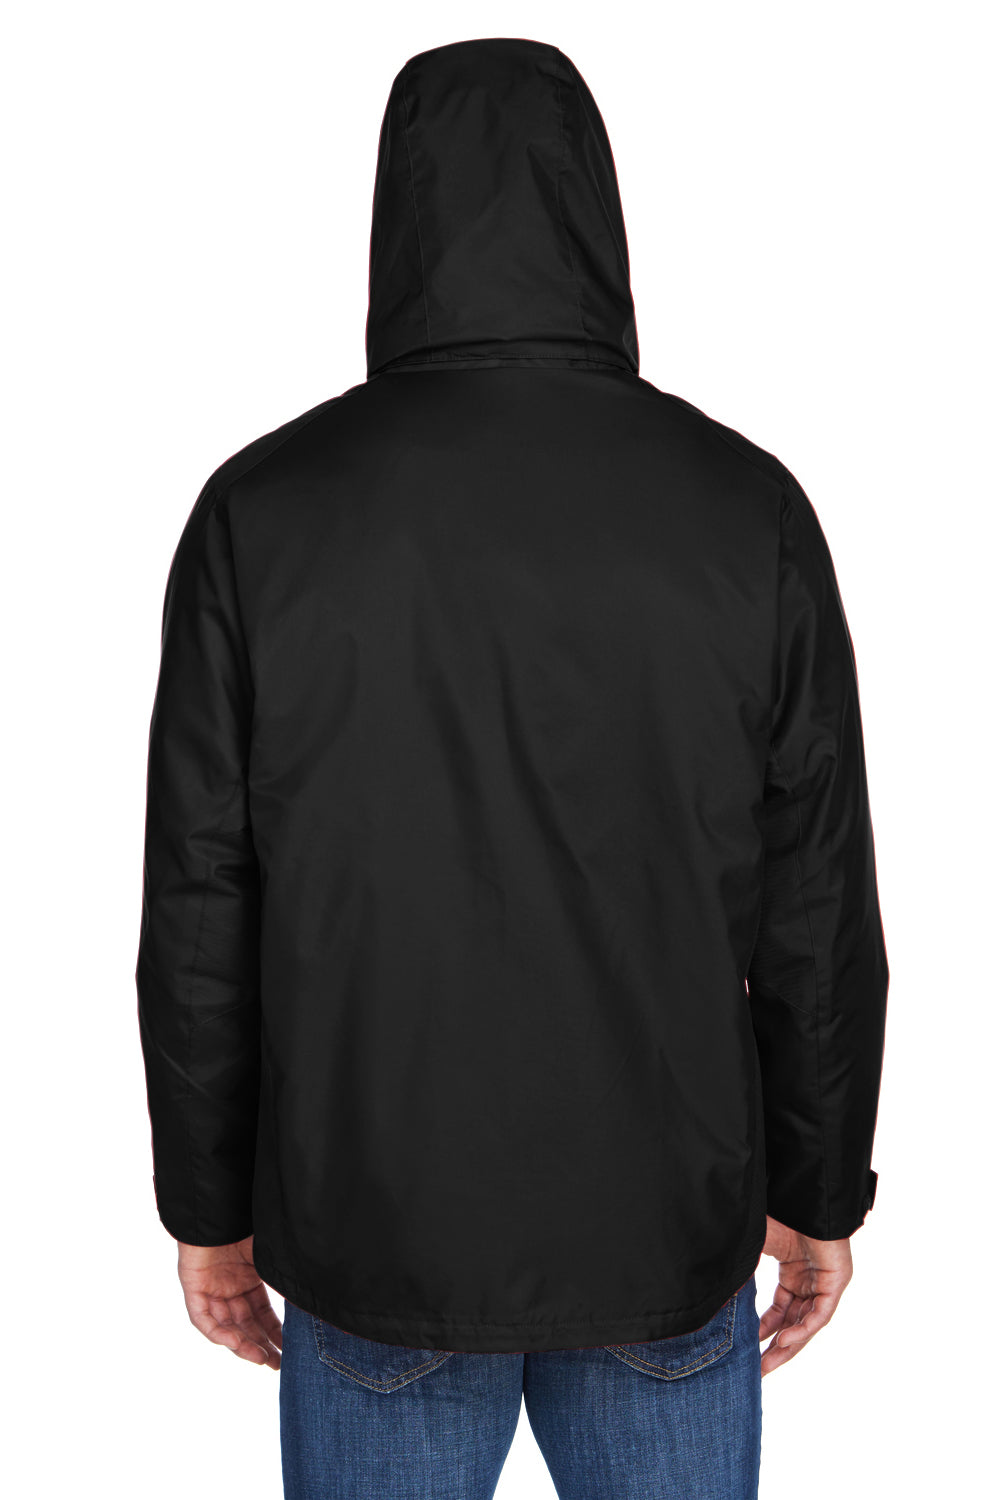 North End 88130 Mens 3-in-1 Full Zip Hooded Jacket Black Back